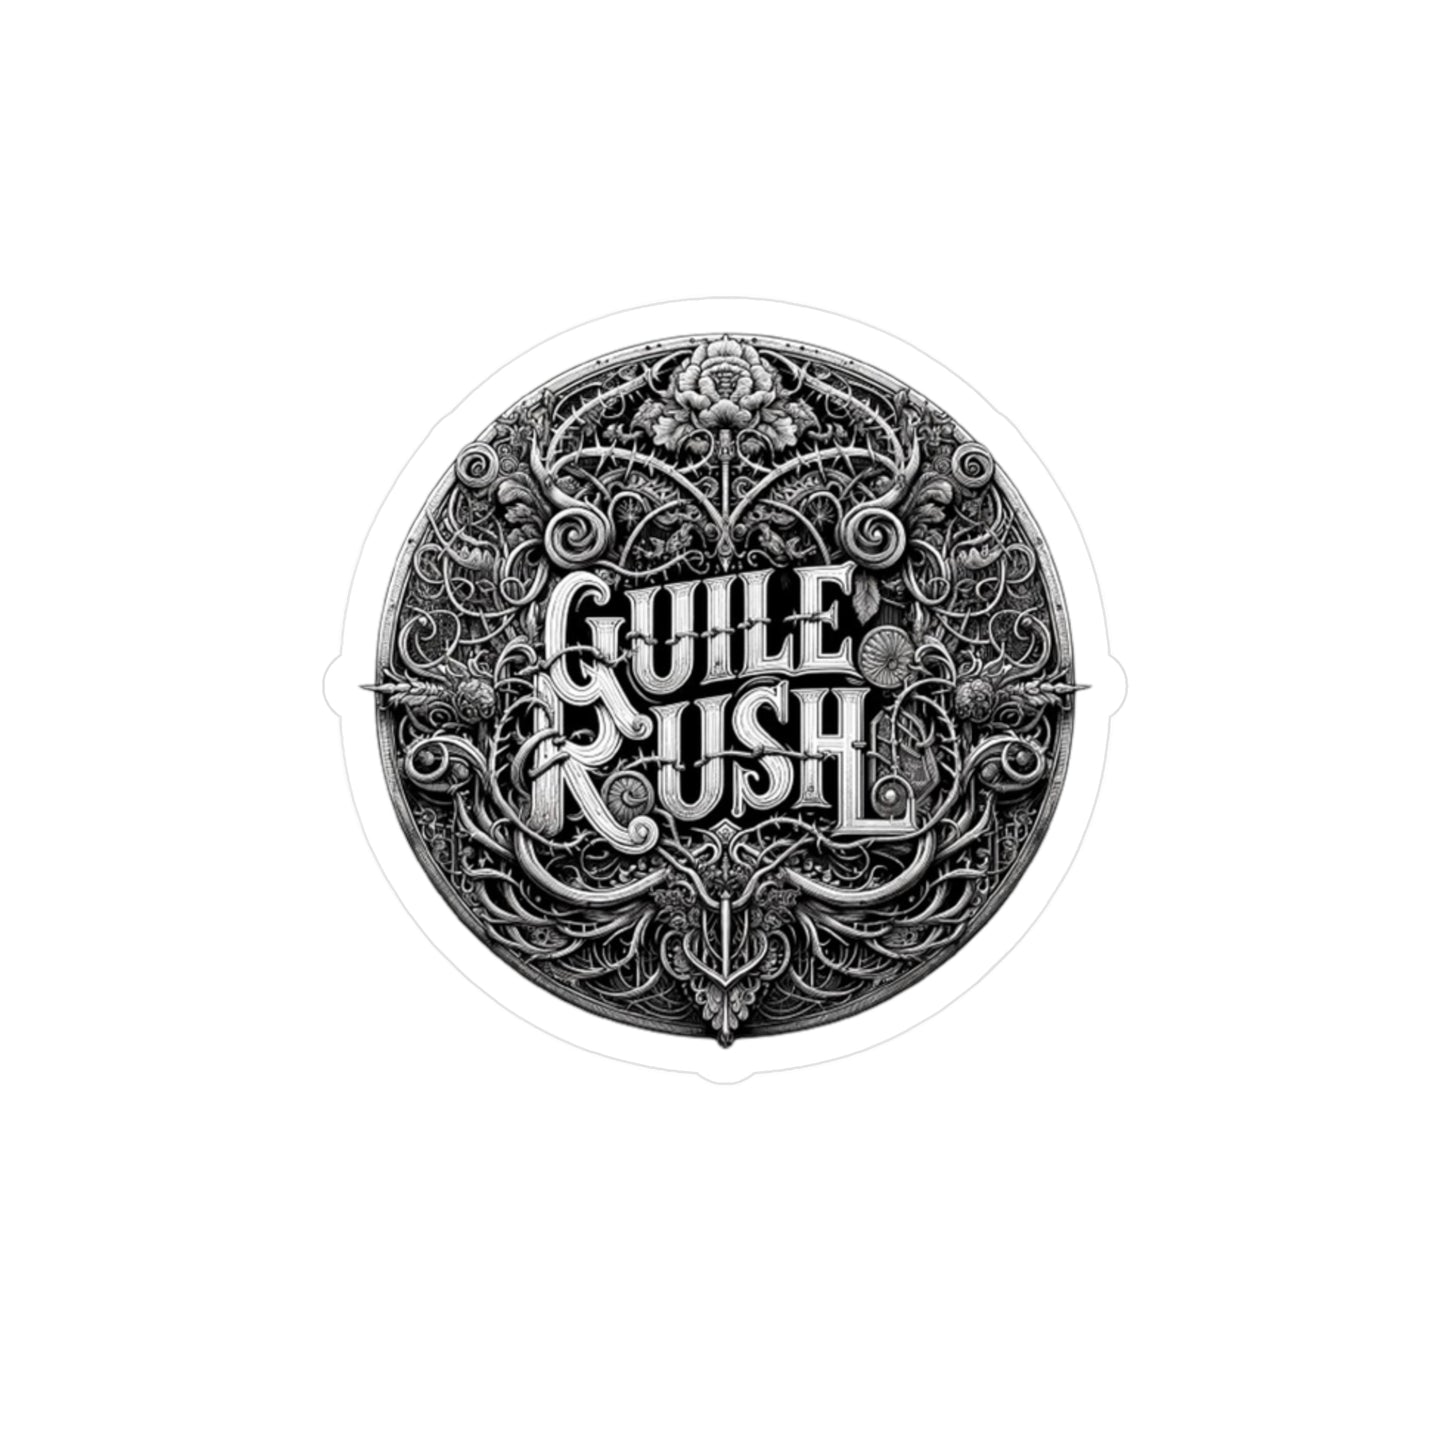 Guile Rush logo decal